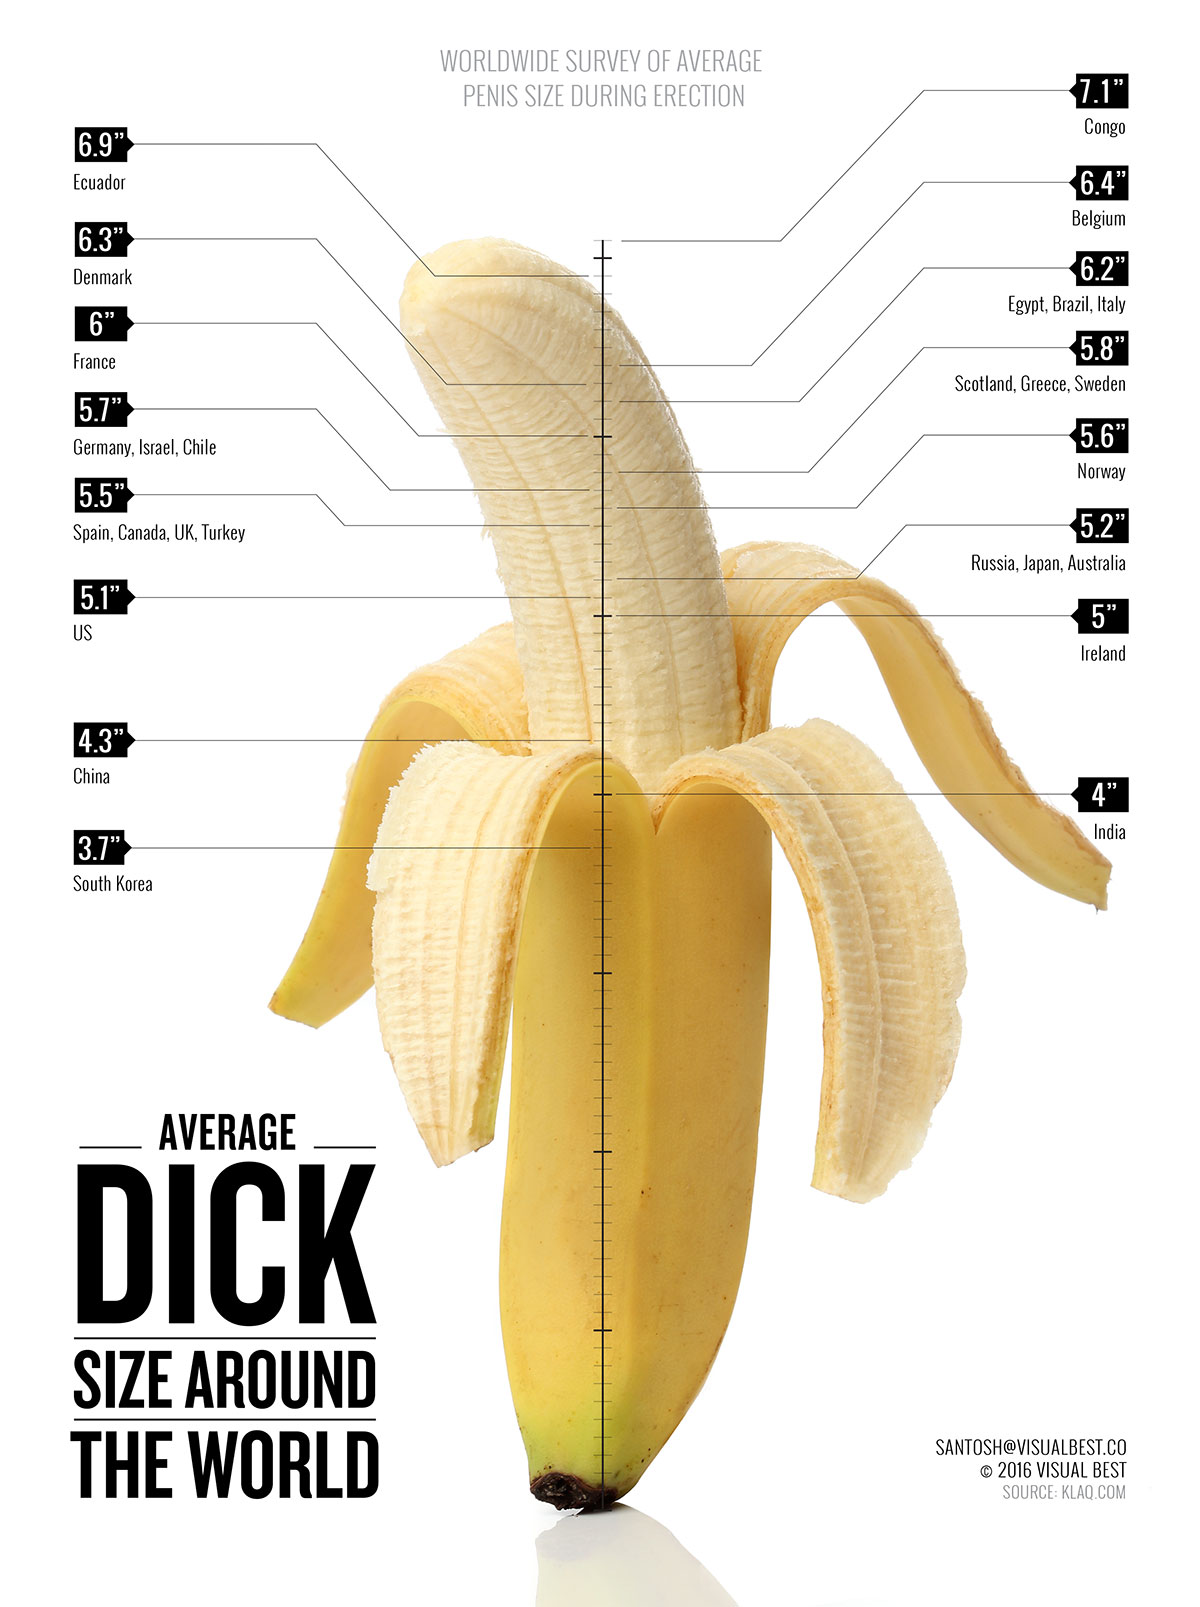 Italian dick size